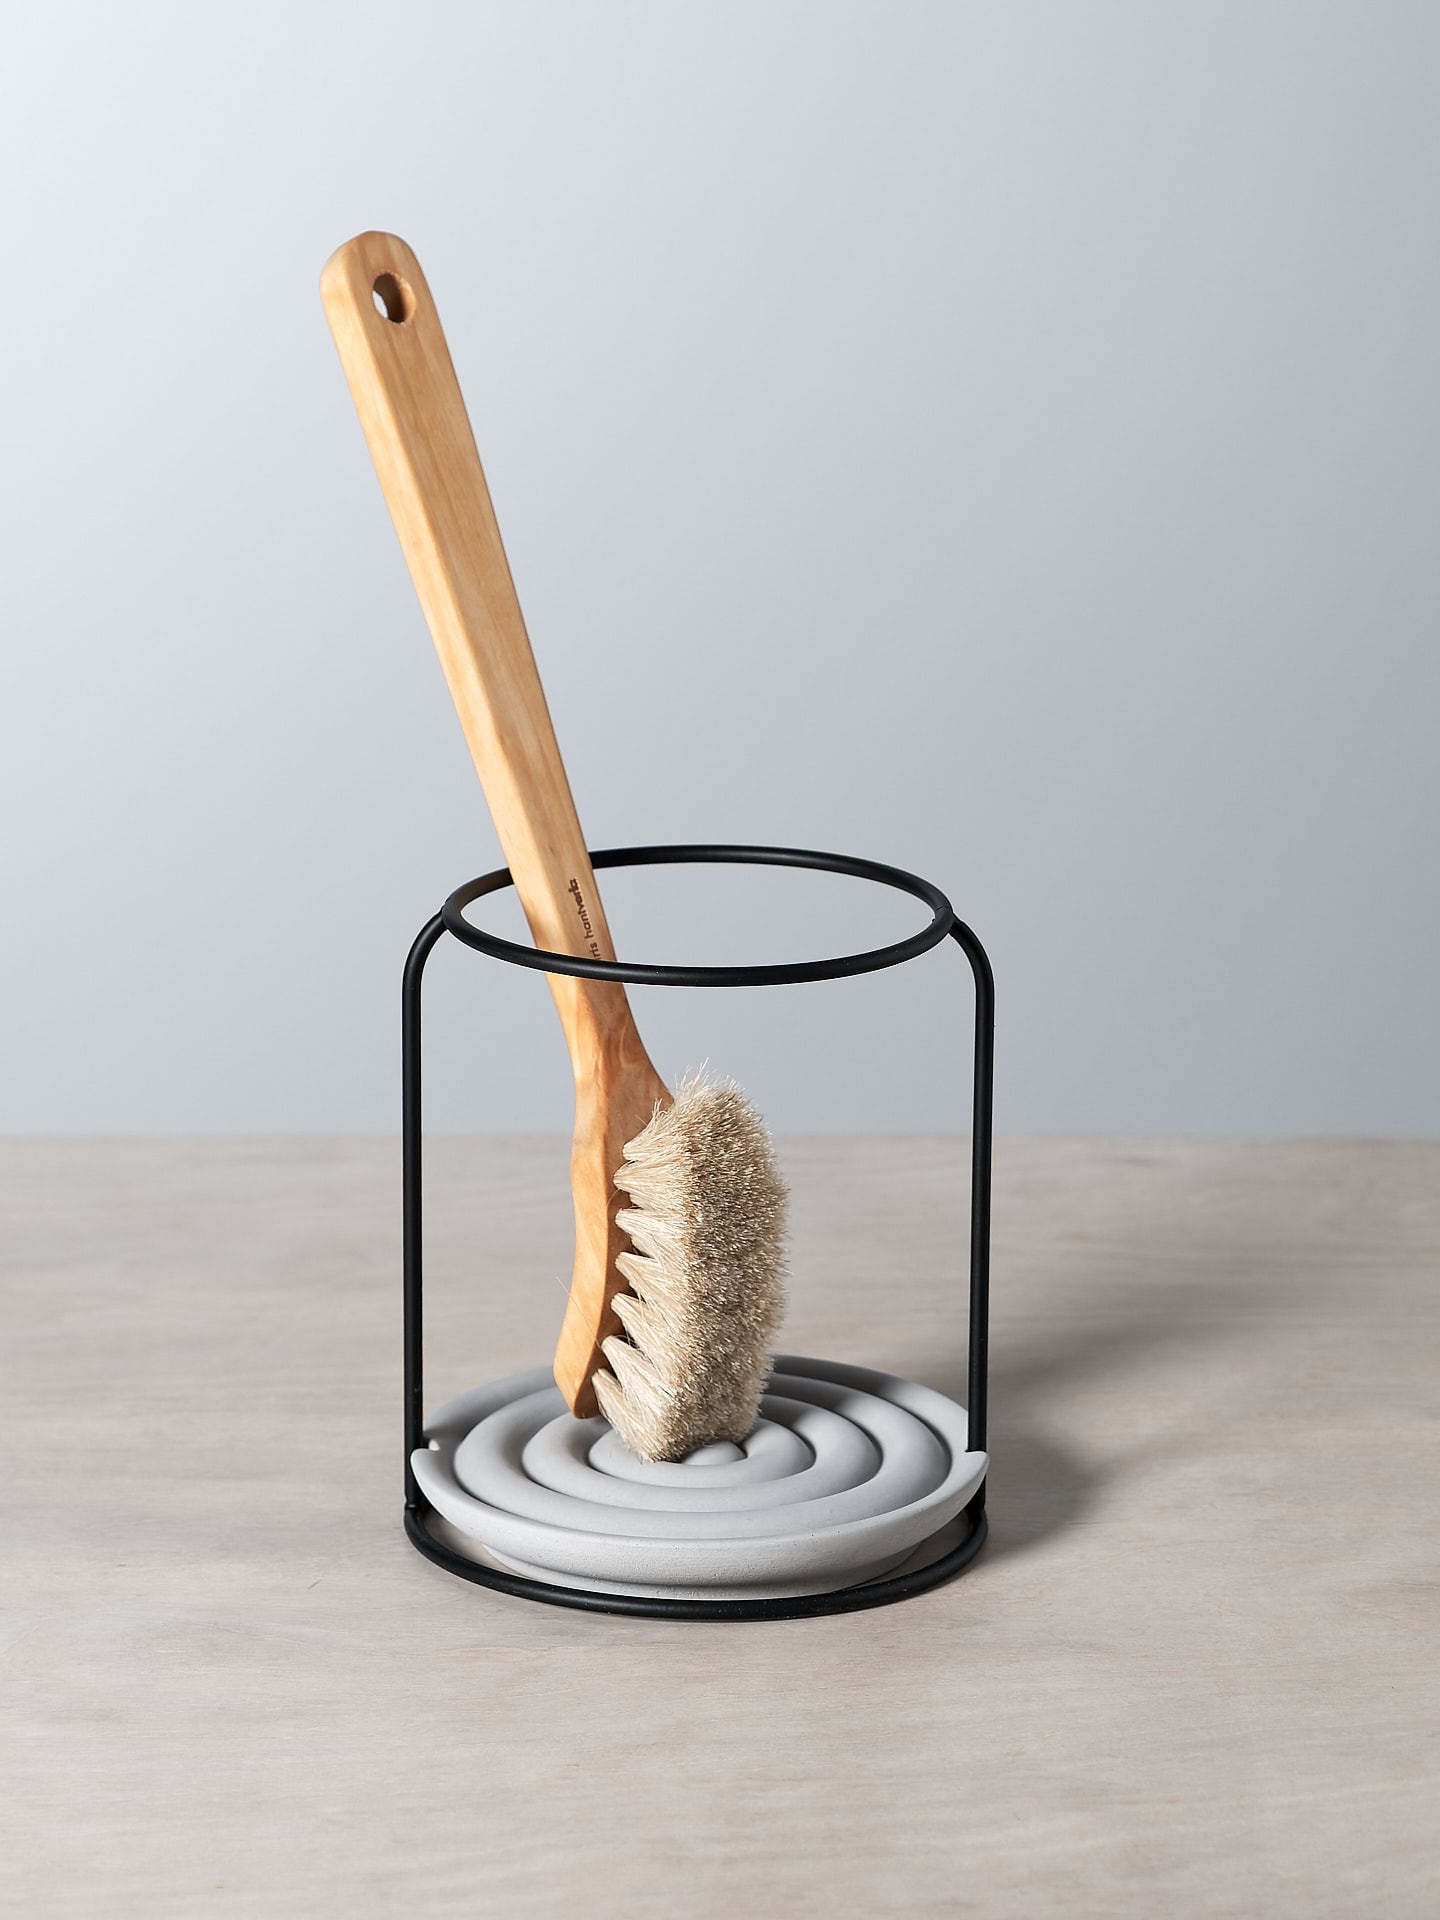 An Iris Hantverk dish brush holder on a table.